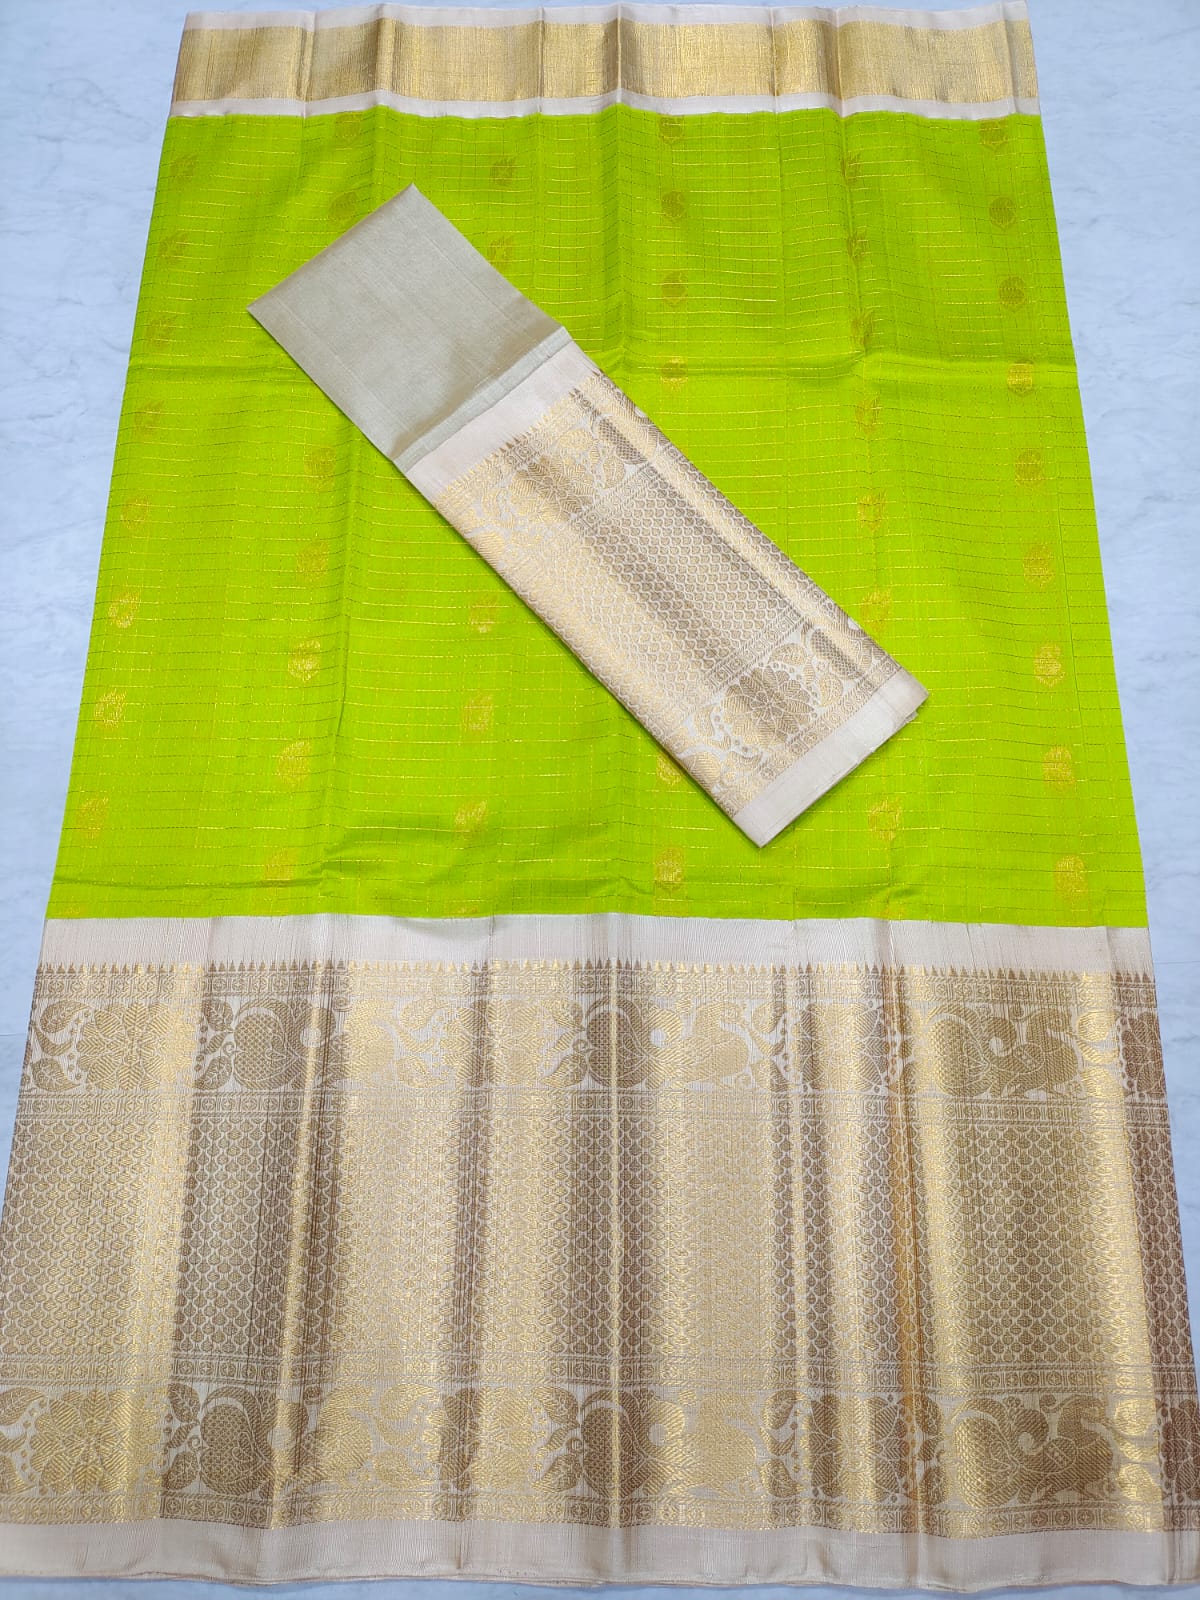 Pin by Manjula reddy on lehengas | Lehenga saree design, Half saree lehenga,  Indian saree blouses designs